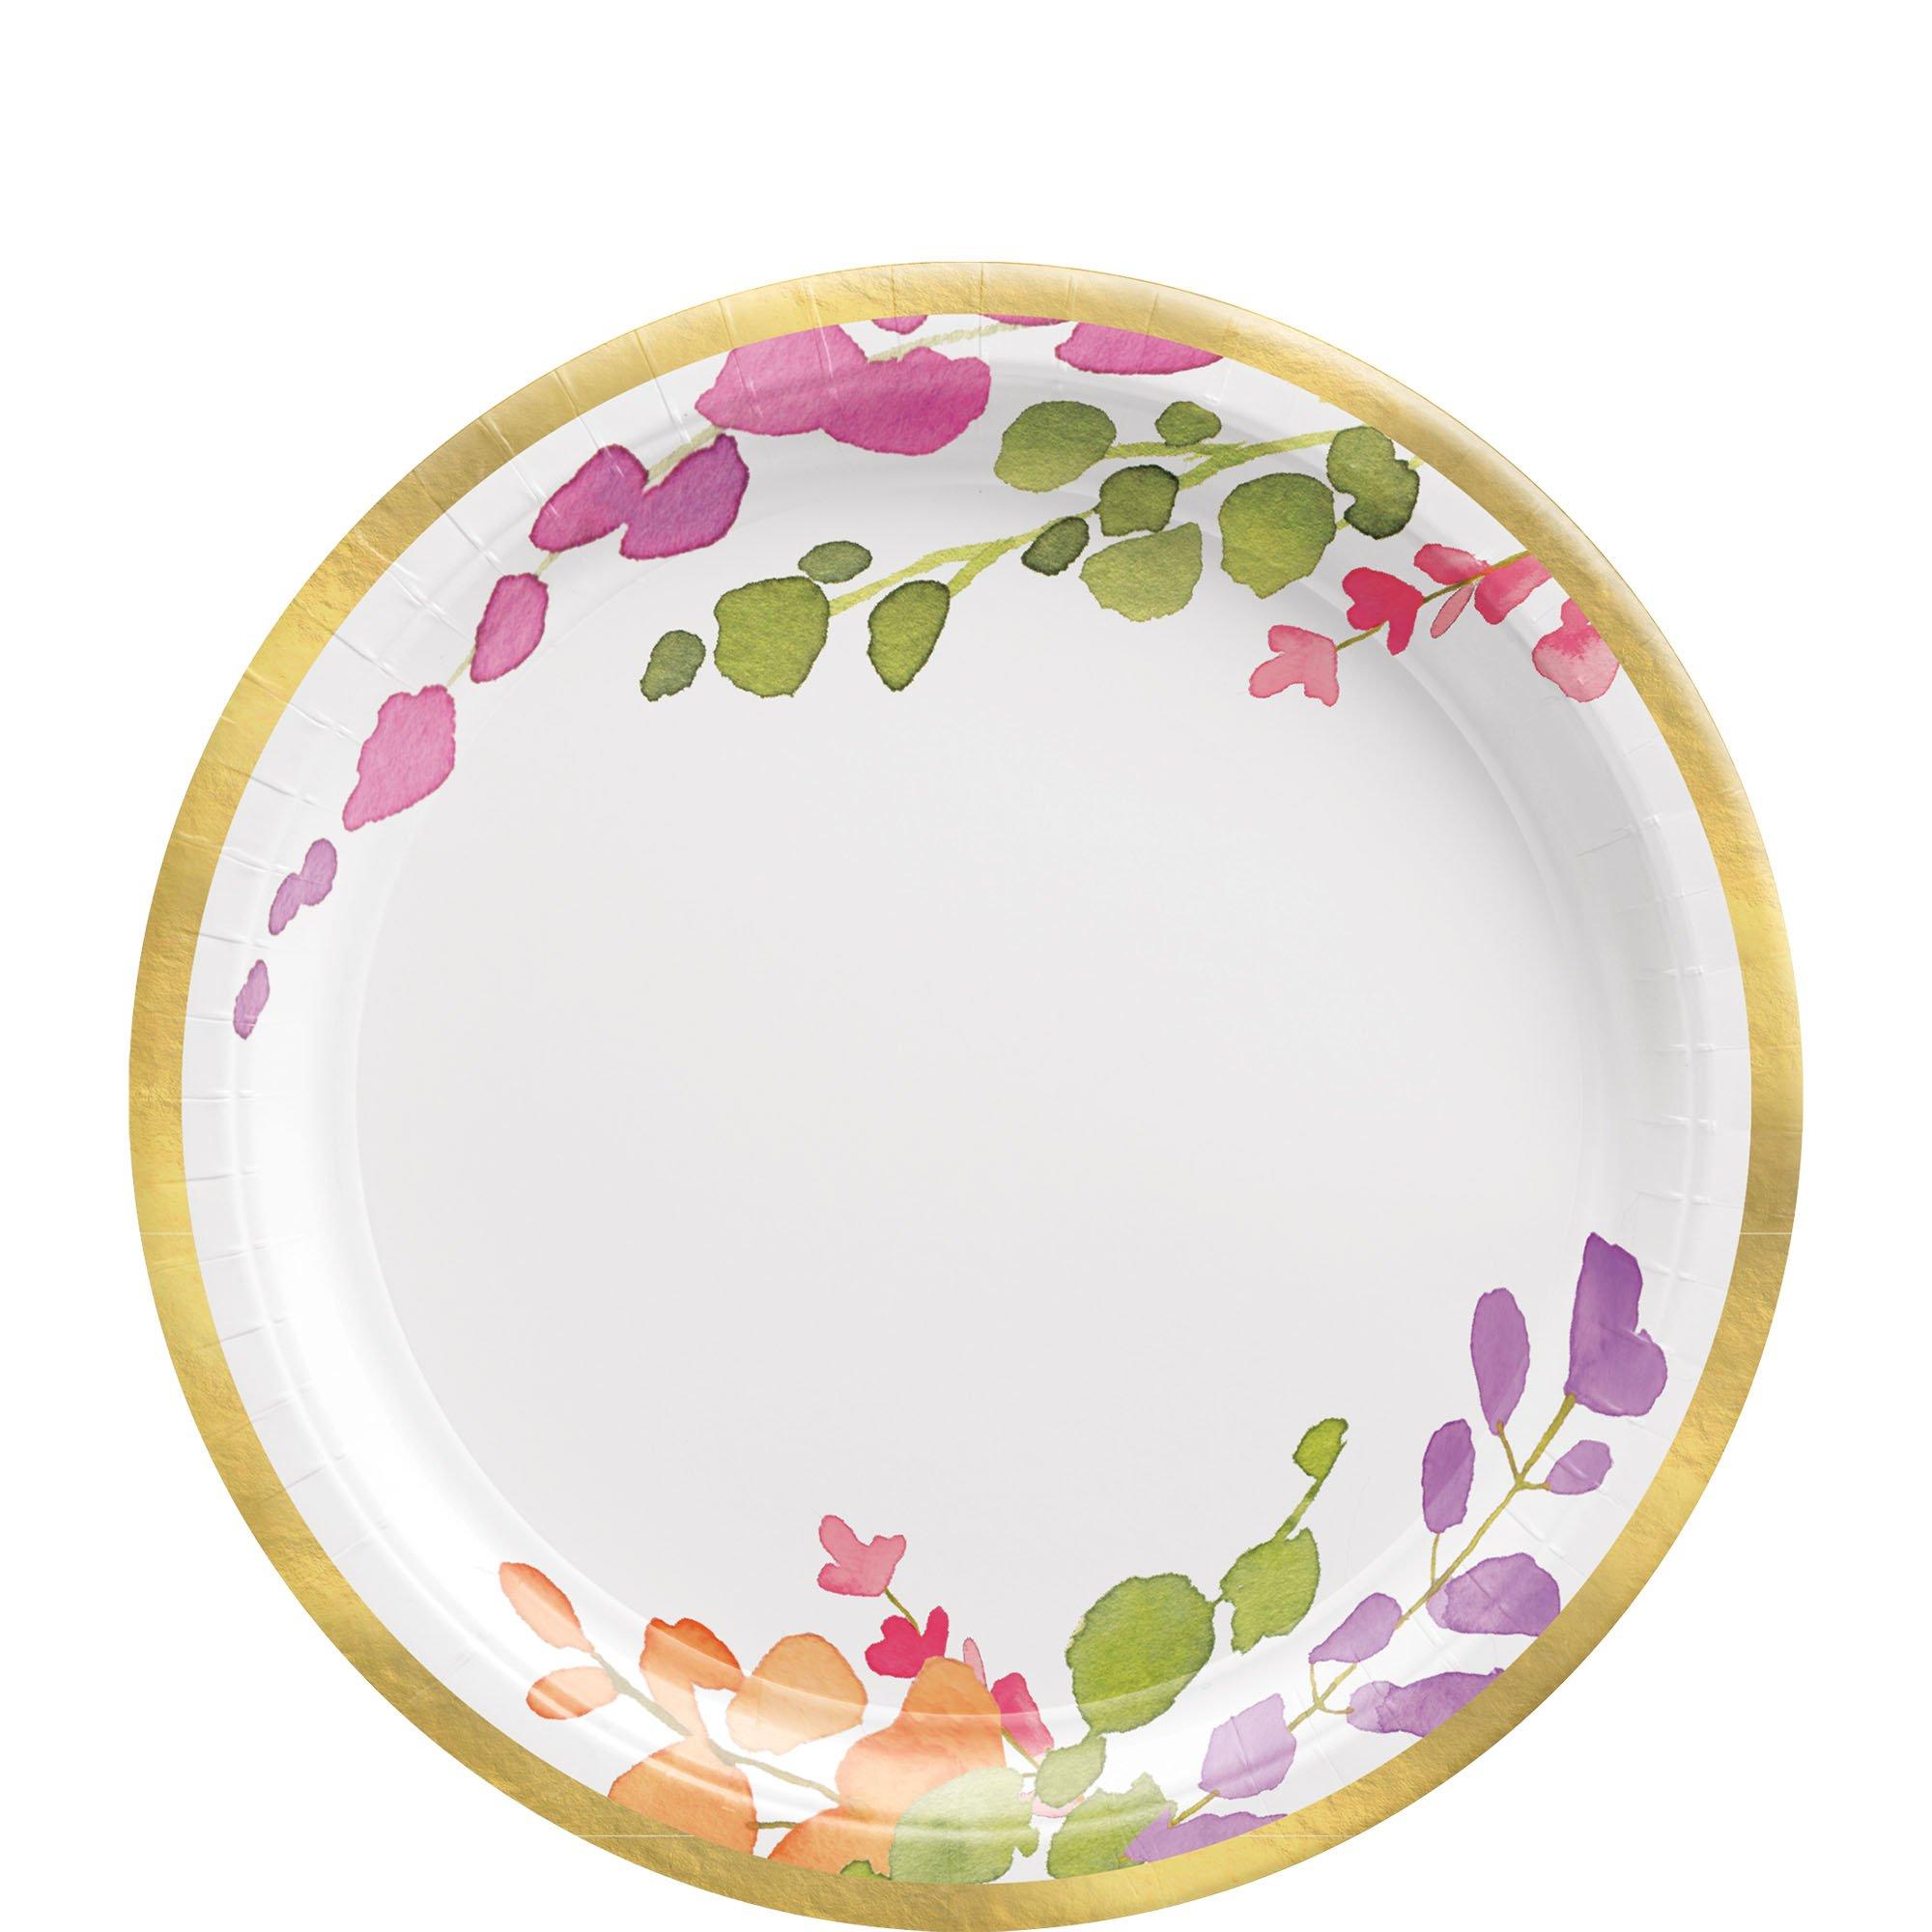 Painted Floral Paper Dessert Plates - 8 Ct.